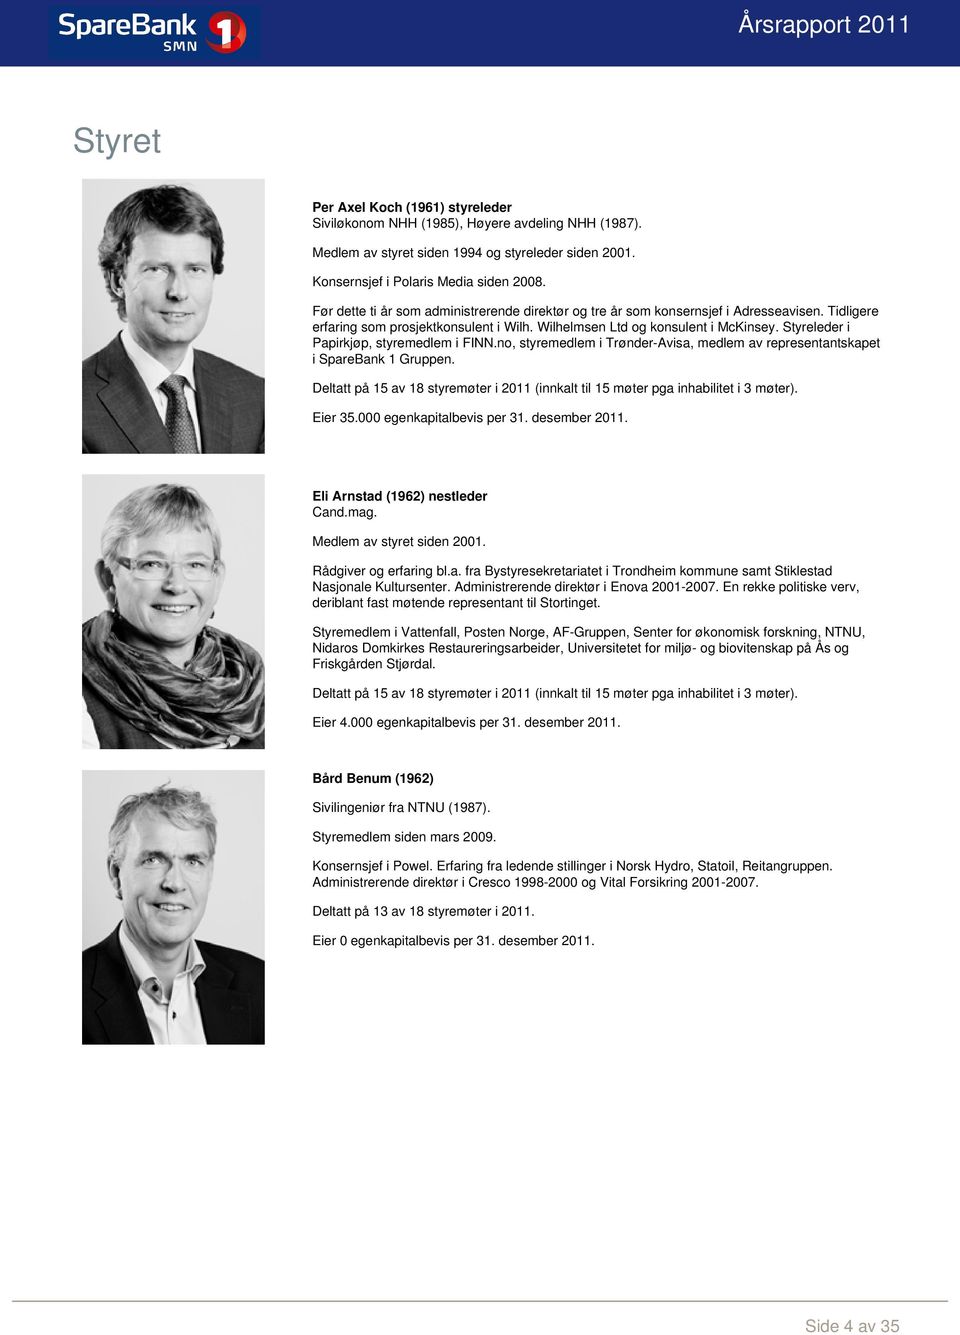 Styreleder i Papirkjøp, styremedlem i FINN.no, styremedlem i Trønder-Avisa, medlem av representantskapet i SpareBank 1 Gruppen.